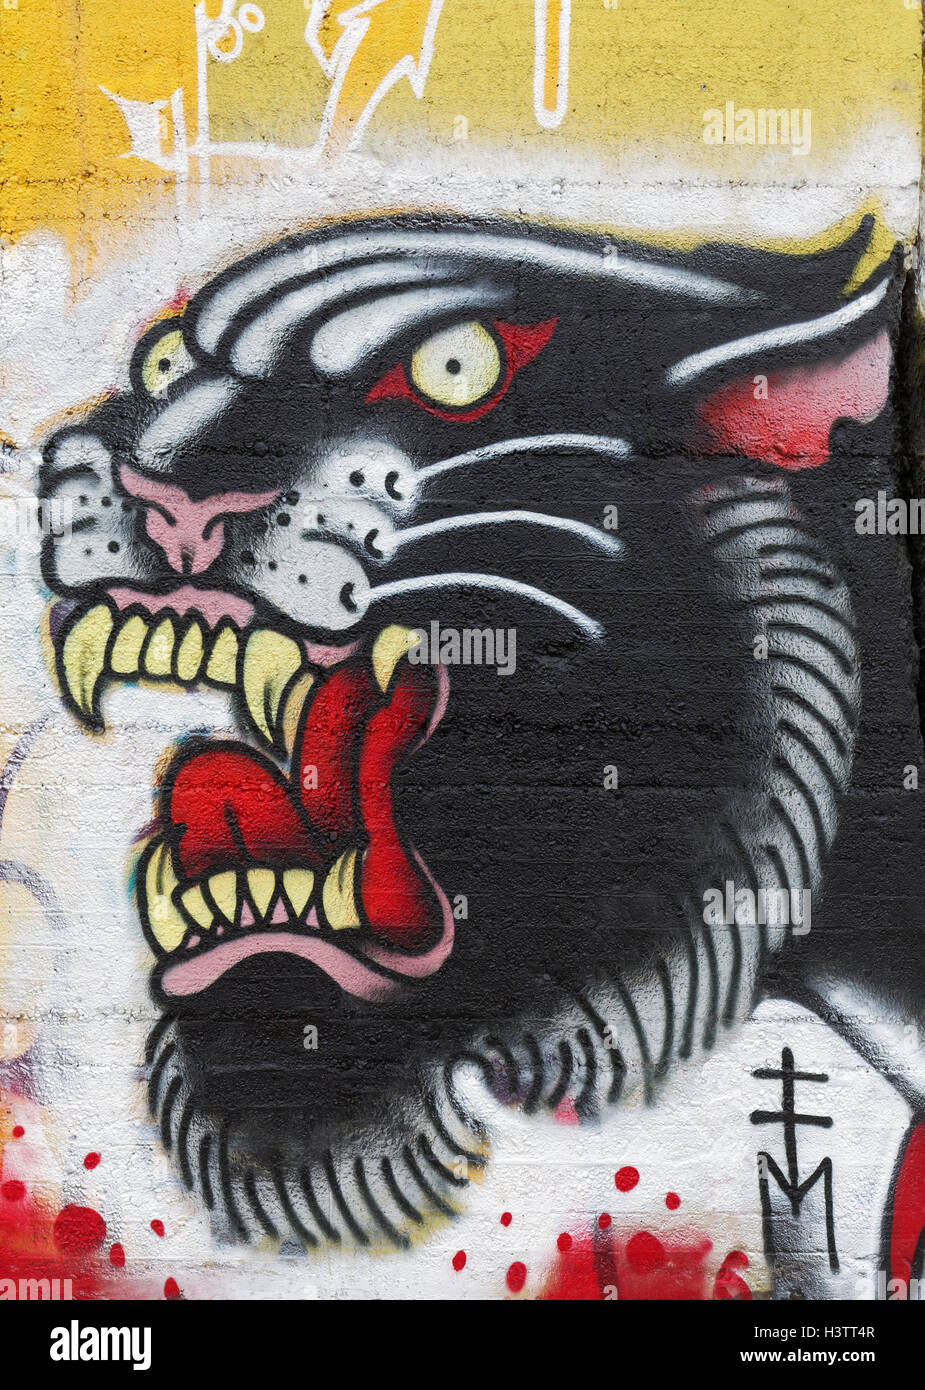 Panther con la boca abierta, graffiti, street art, Duisburg, Renania del Norte-Westfalia, Alemania Foto de stock